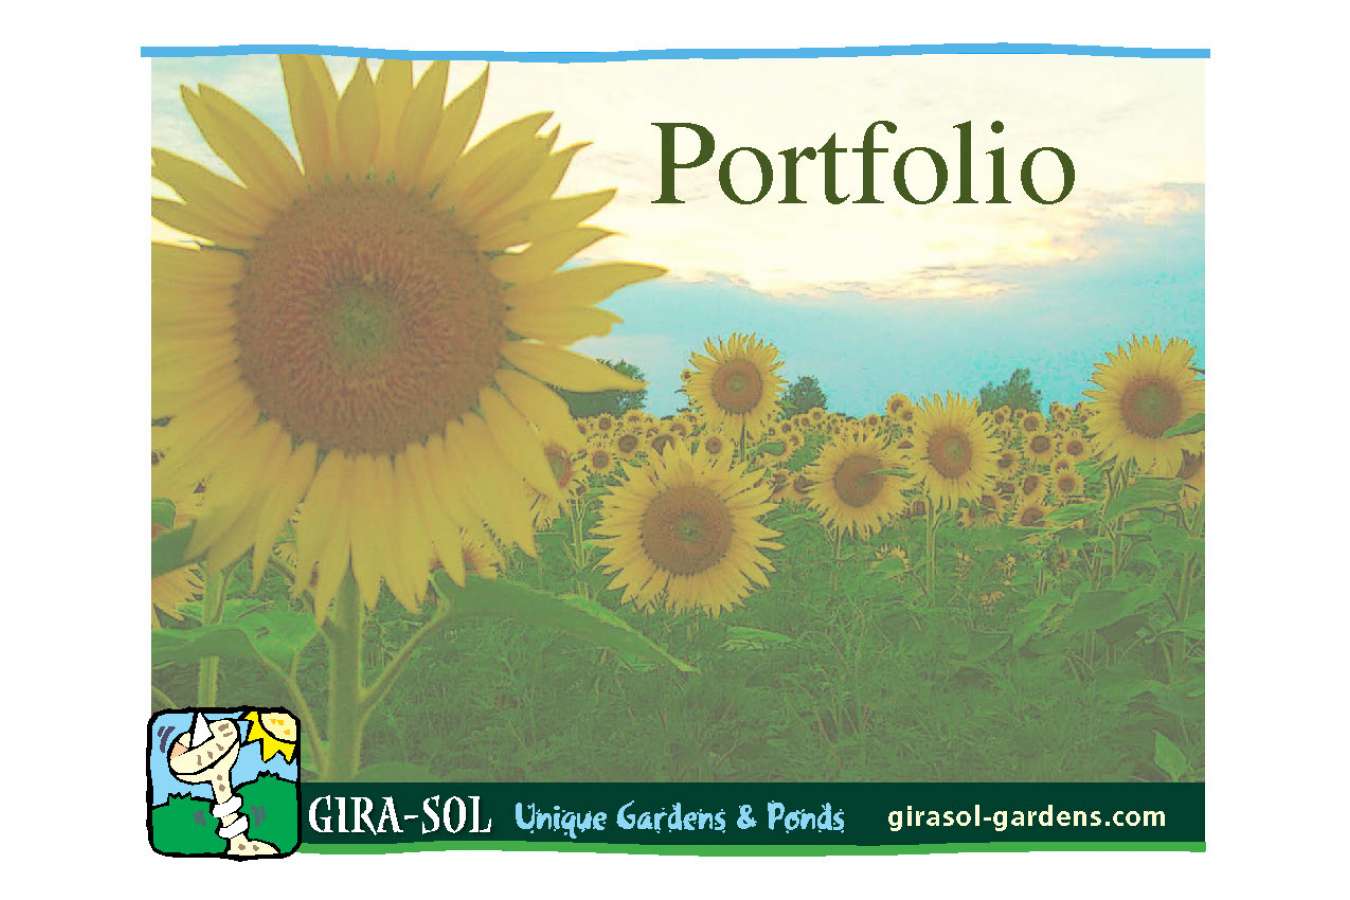 Girasol 8.5 x 11 book 16_Page_09 : Cover for Girasol portfolio flip book.  